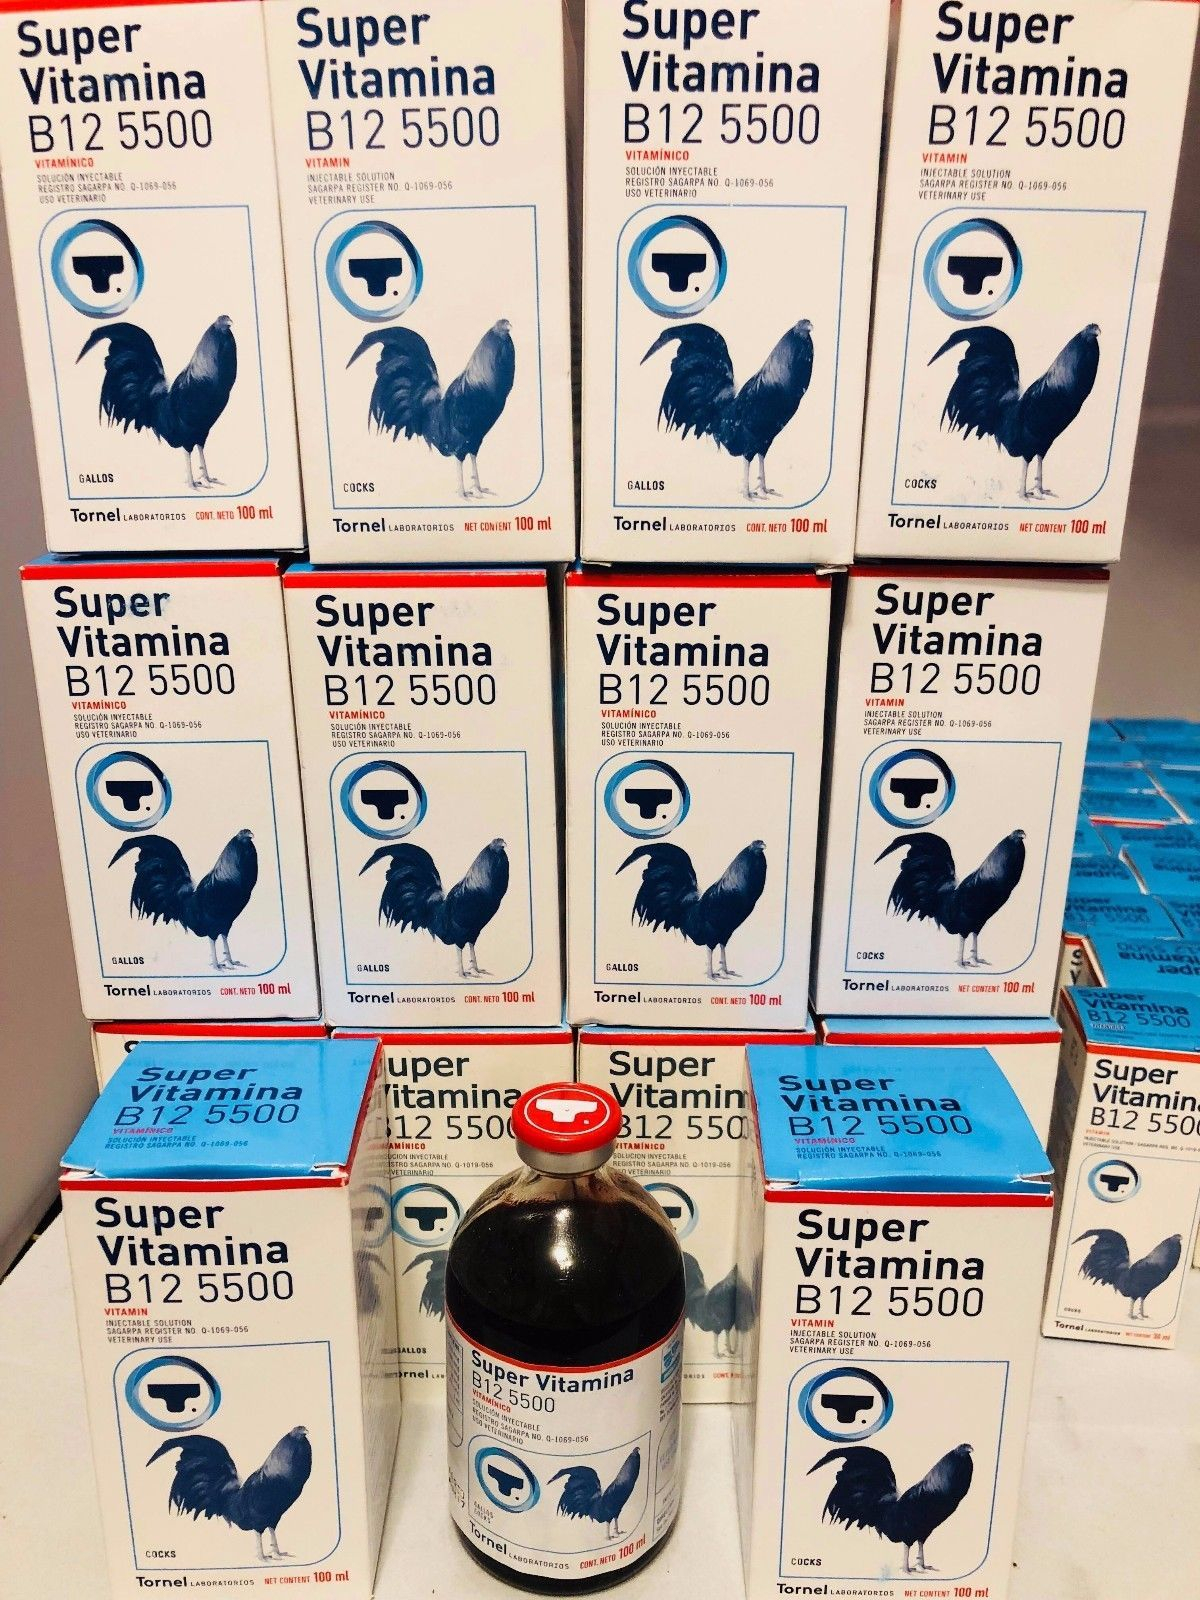 Super Vitamina Tornel B12 5500 100Ml Bottle Gallos Gamefowl pertaining to Cockfighting Moon Calendar 2020